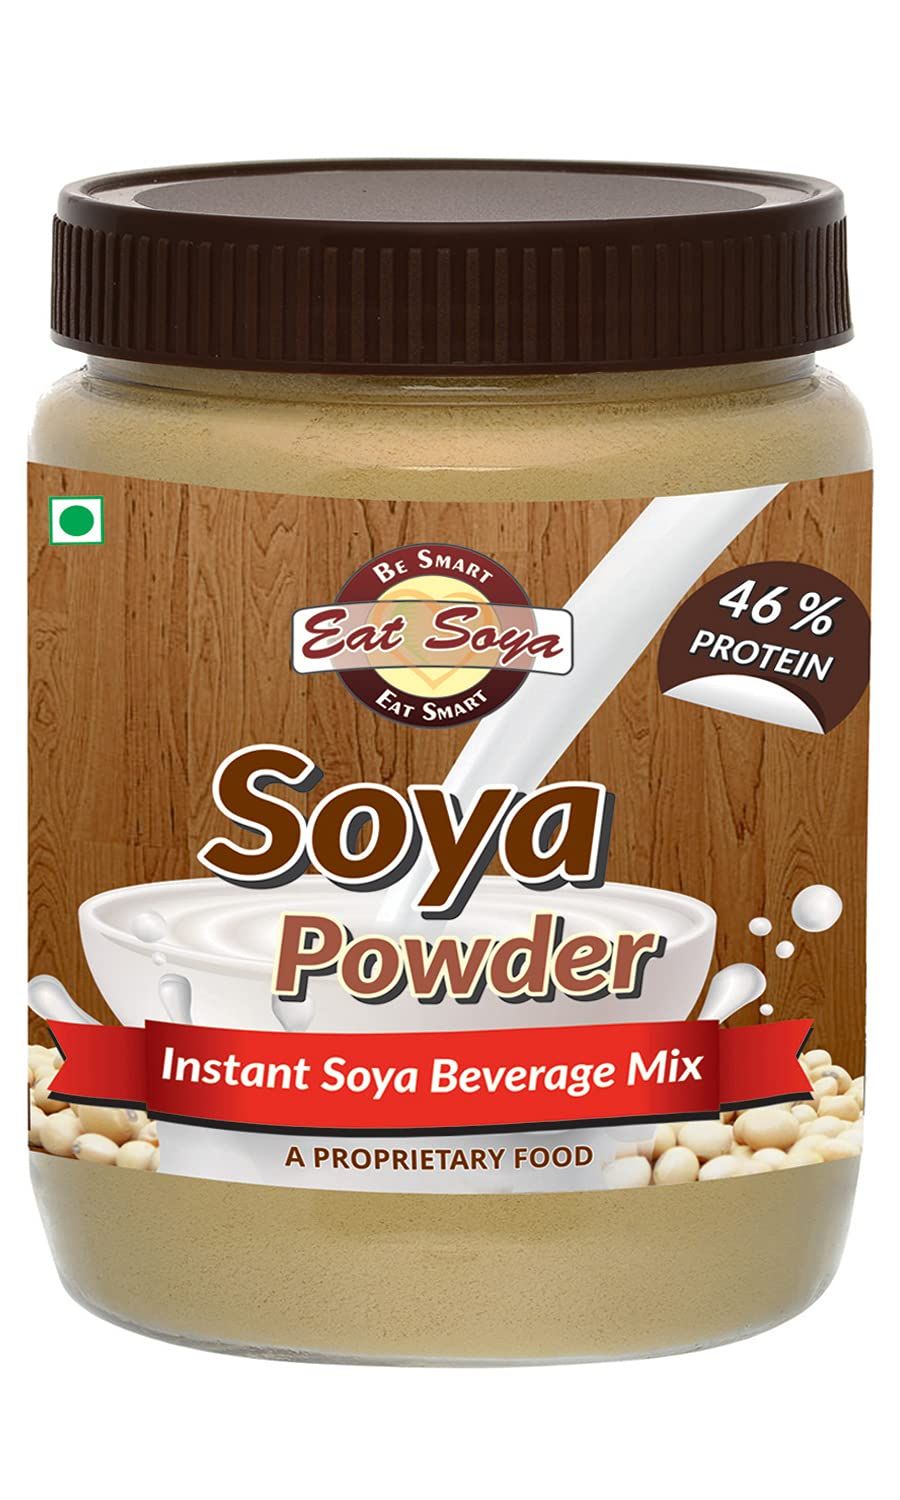 Eat Soya Drink Powder Image